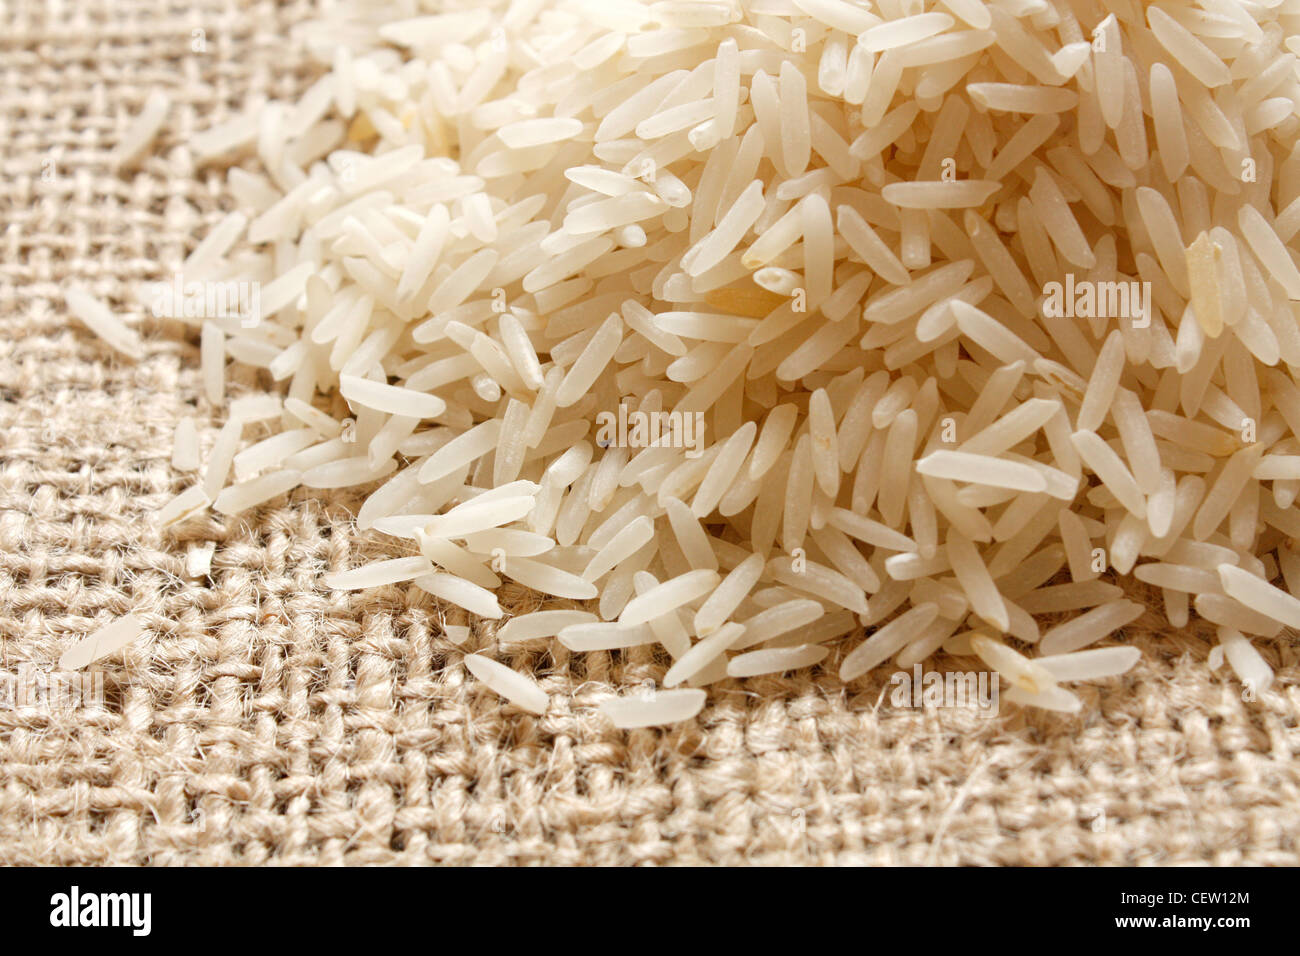 Basmati rice in a heap Stock Photo